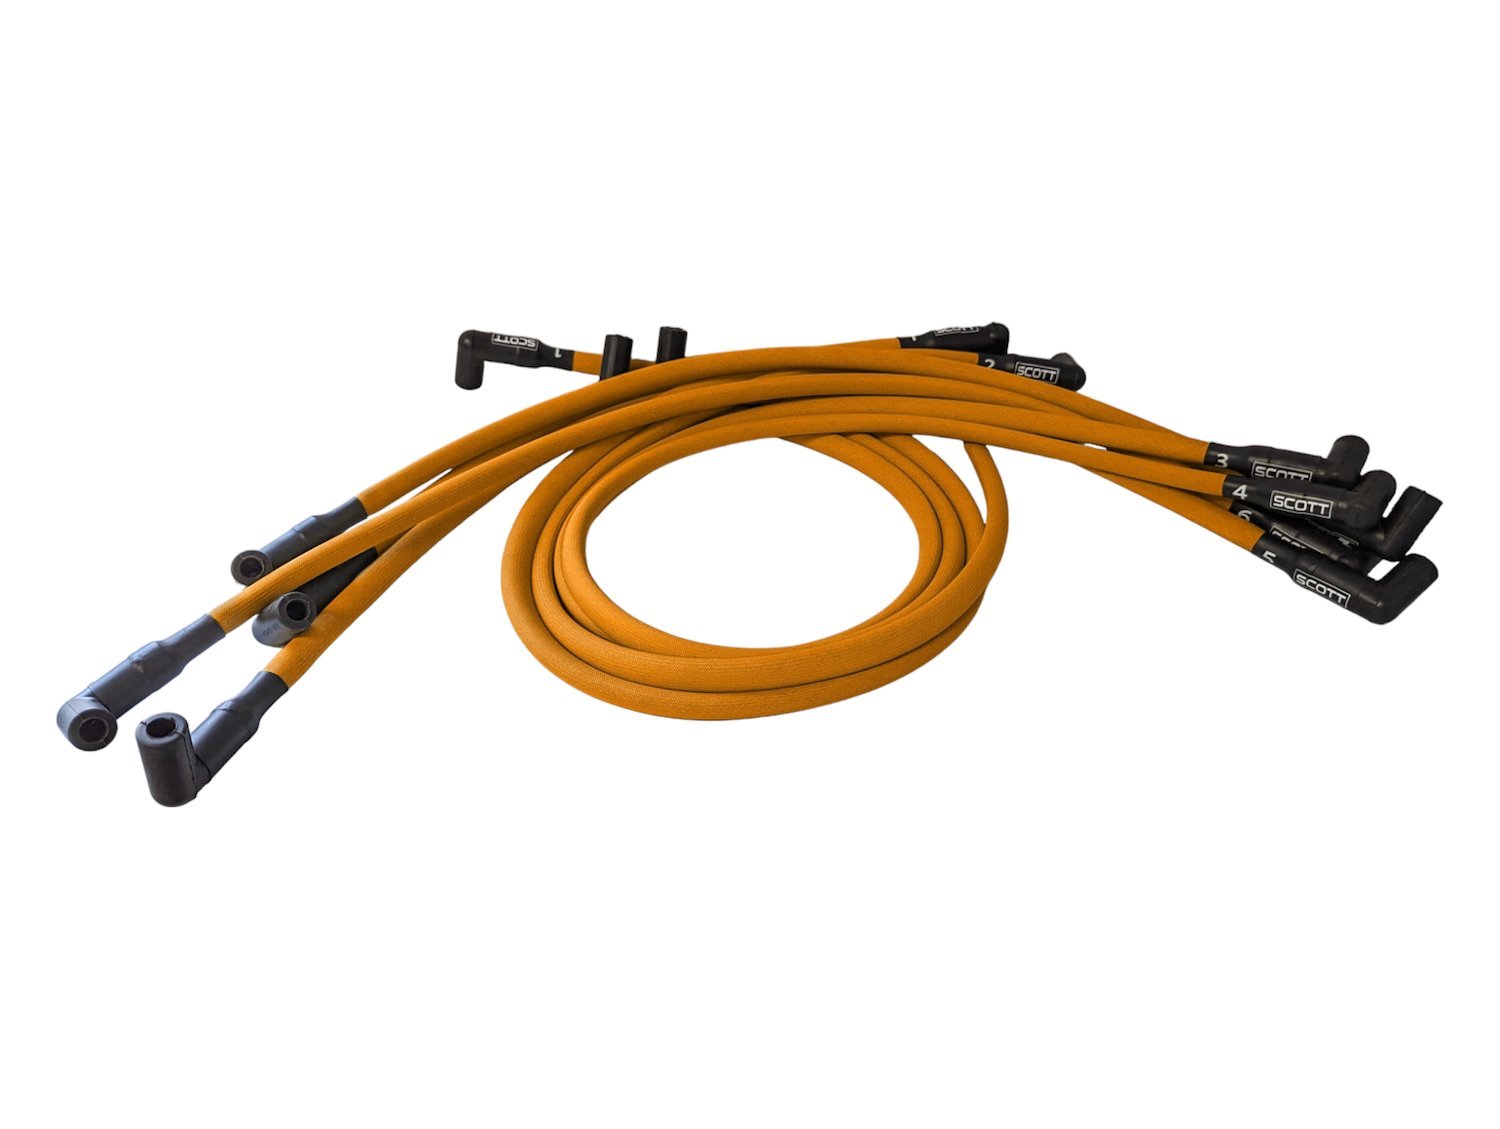 SPW-PS-416-6 High-Performance Fiberglass-Oversleeved Spark Plug Wire Set for Big Block Chevy, Under Header [Orange]